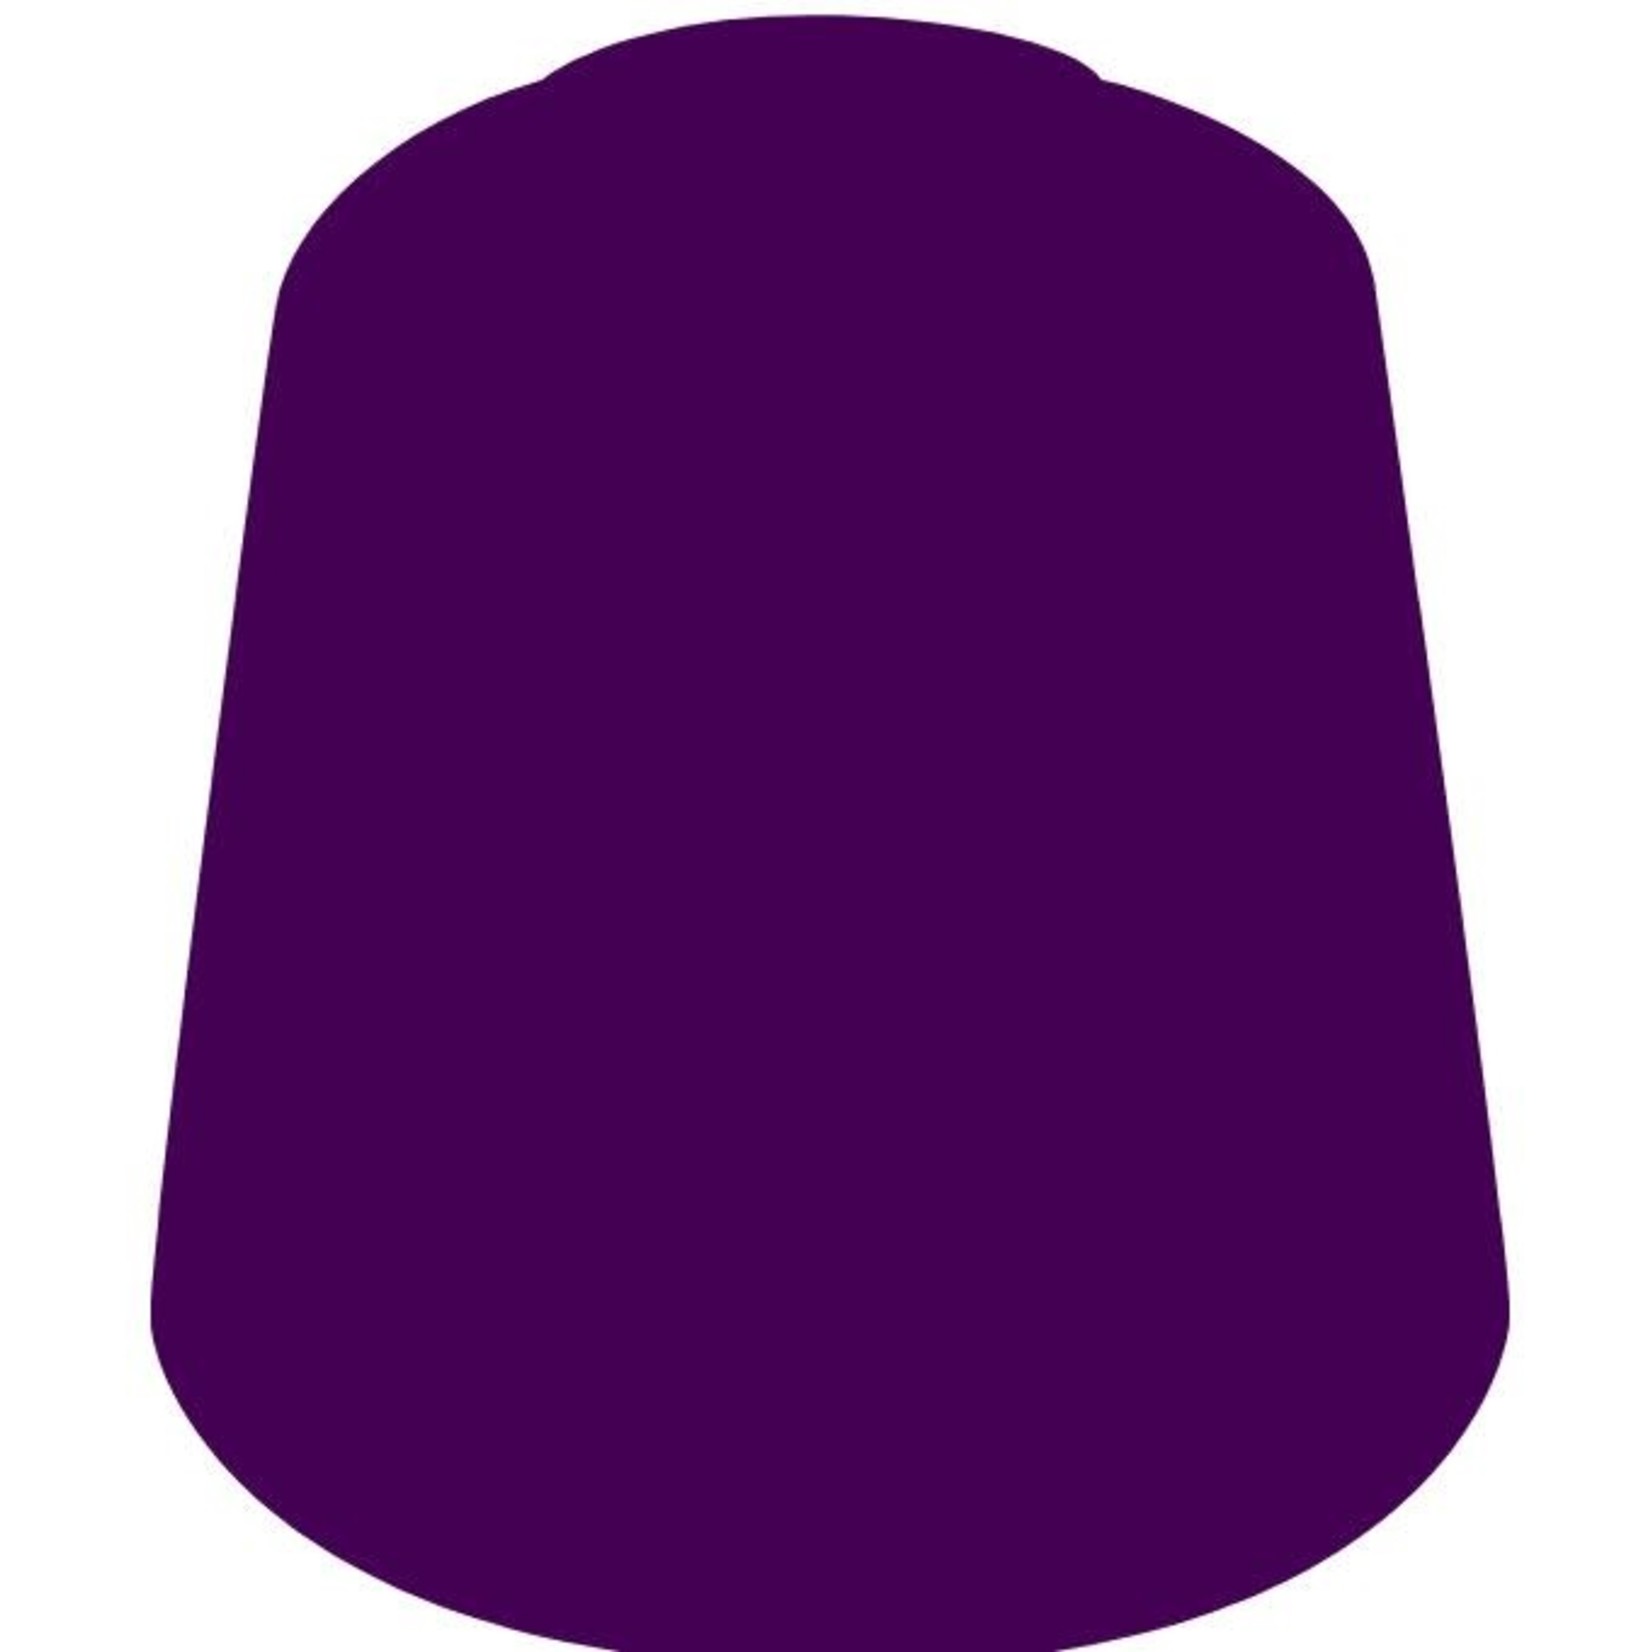 Citadel Phoenician Purple (Base 12ml)